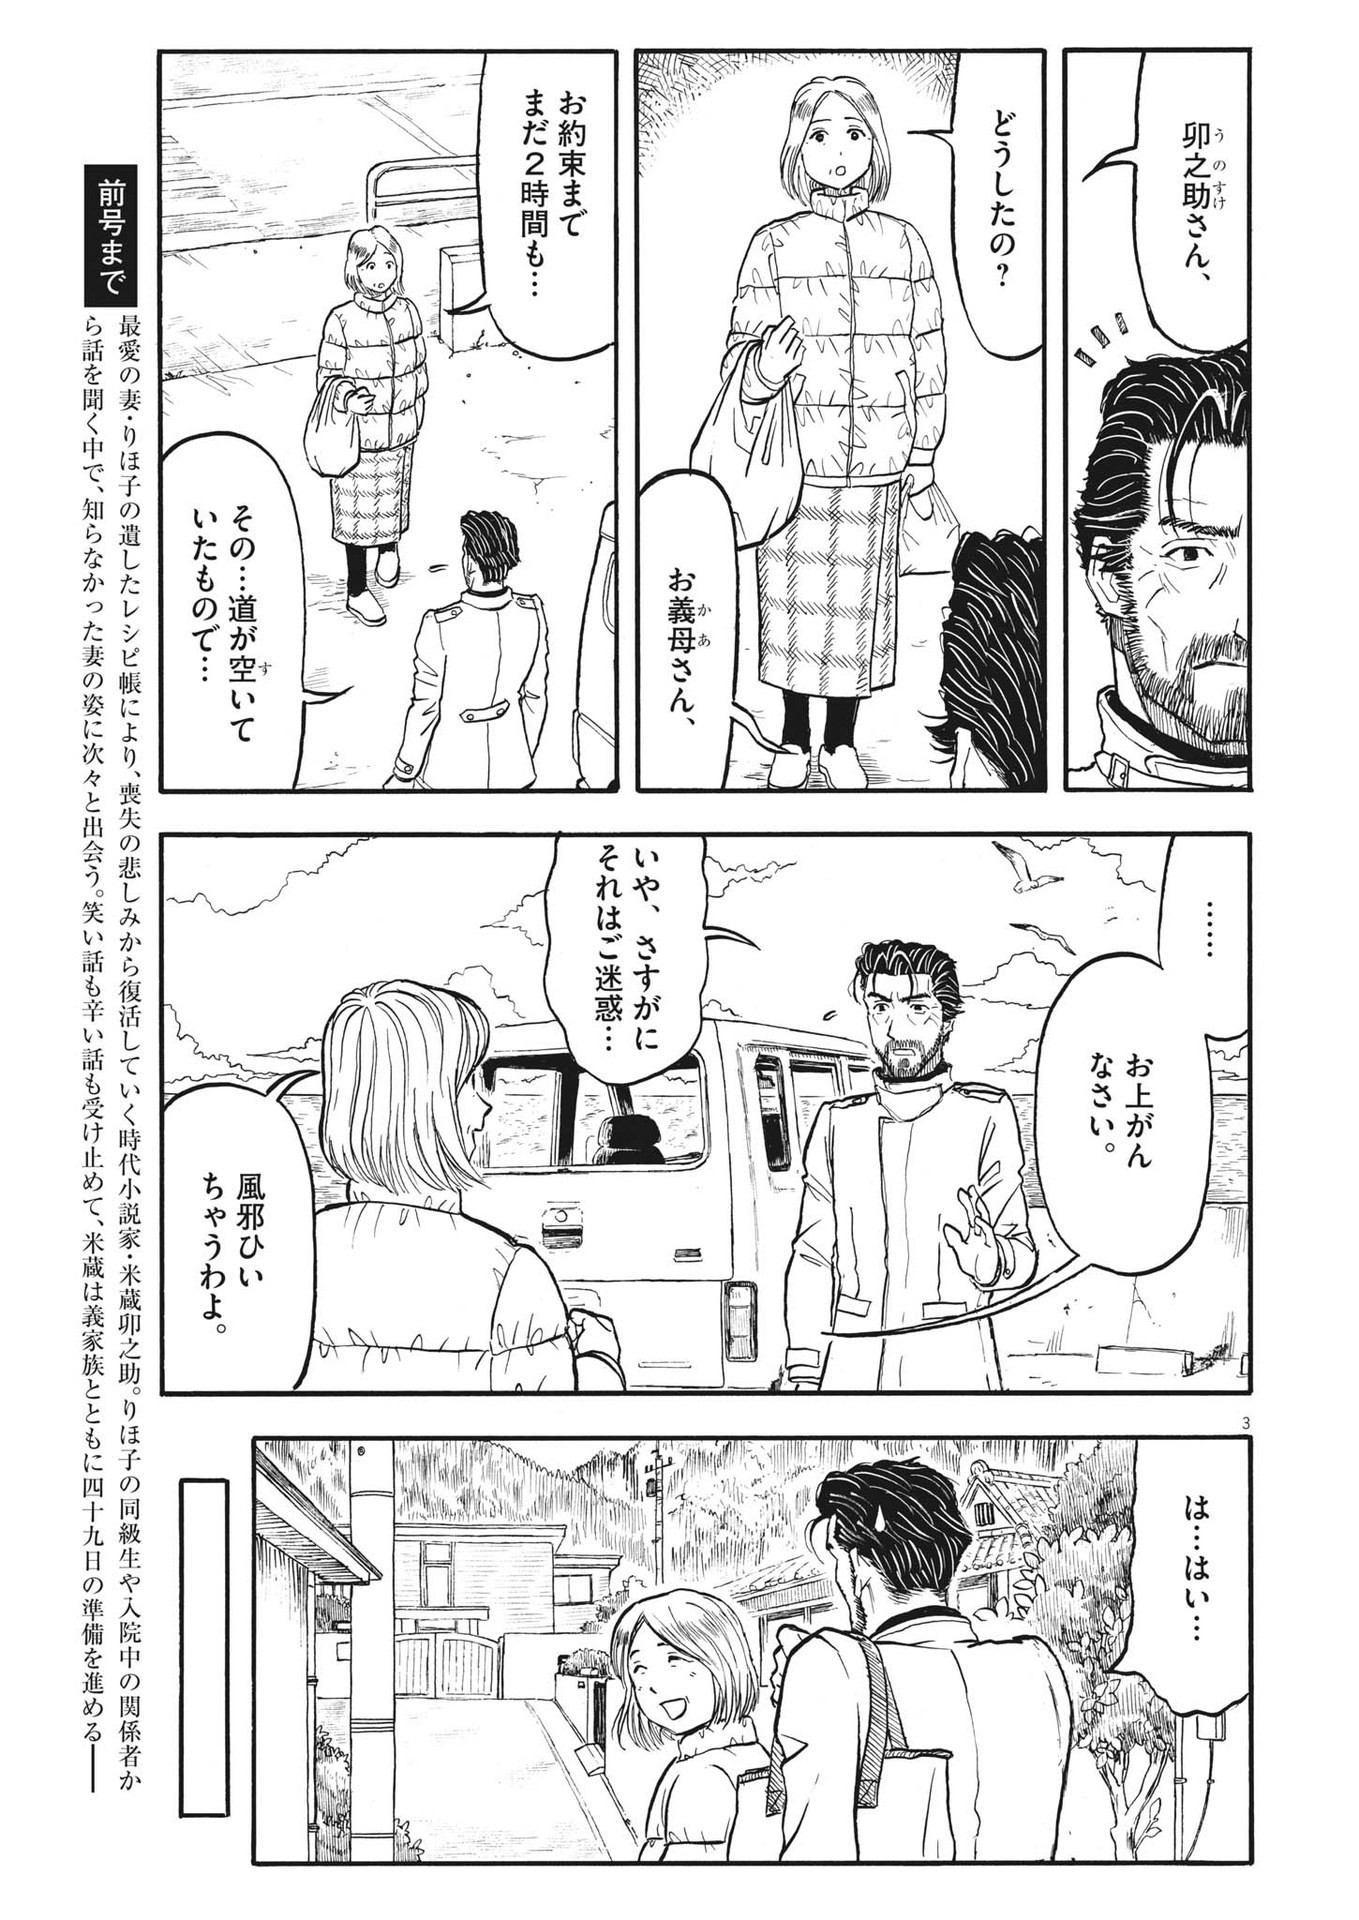 Komegura Fuufu no Recipe-chou - Chapter 26 - Page 3